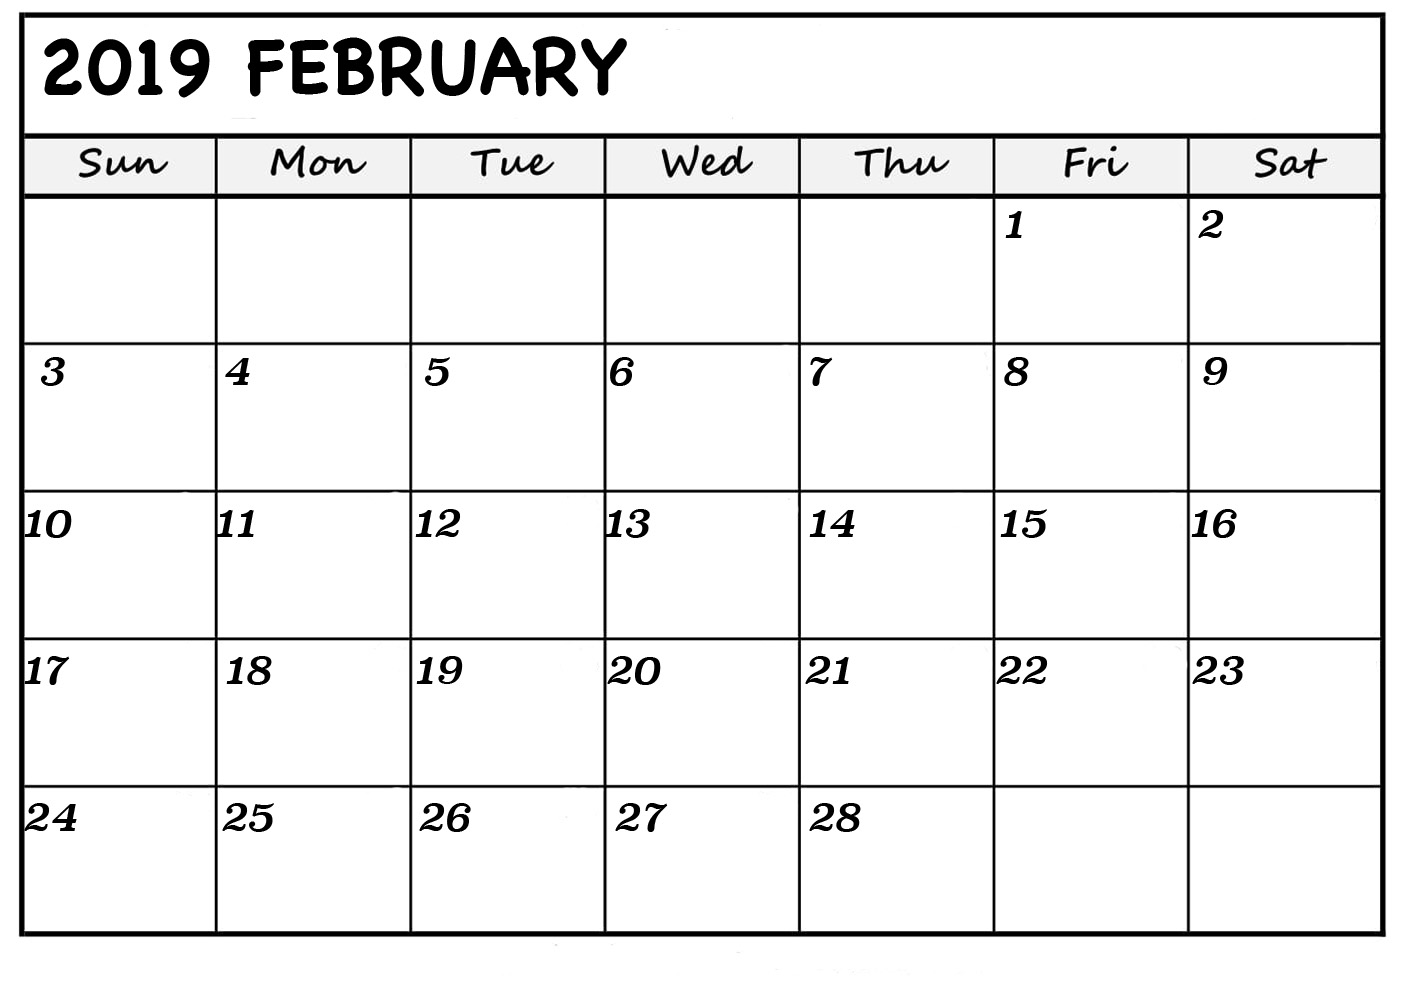 2019 february calendar free illustrator download